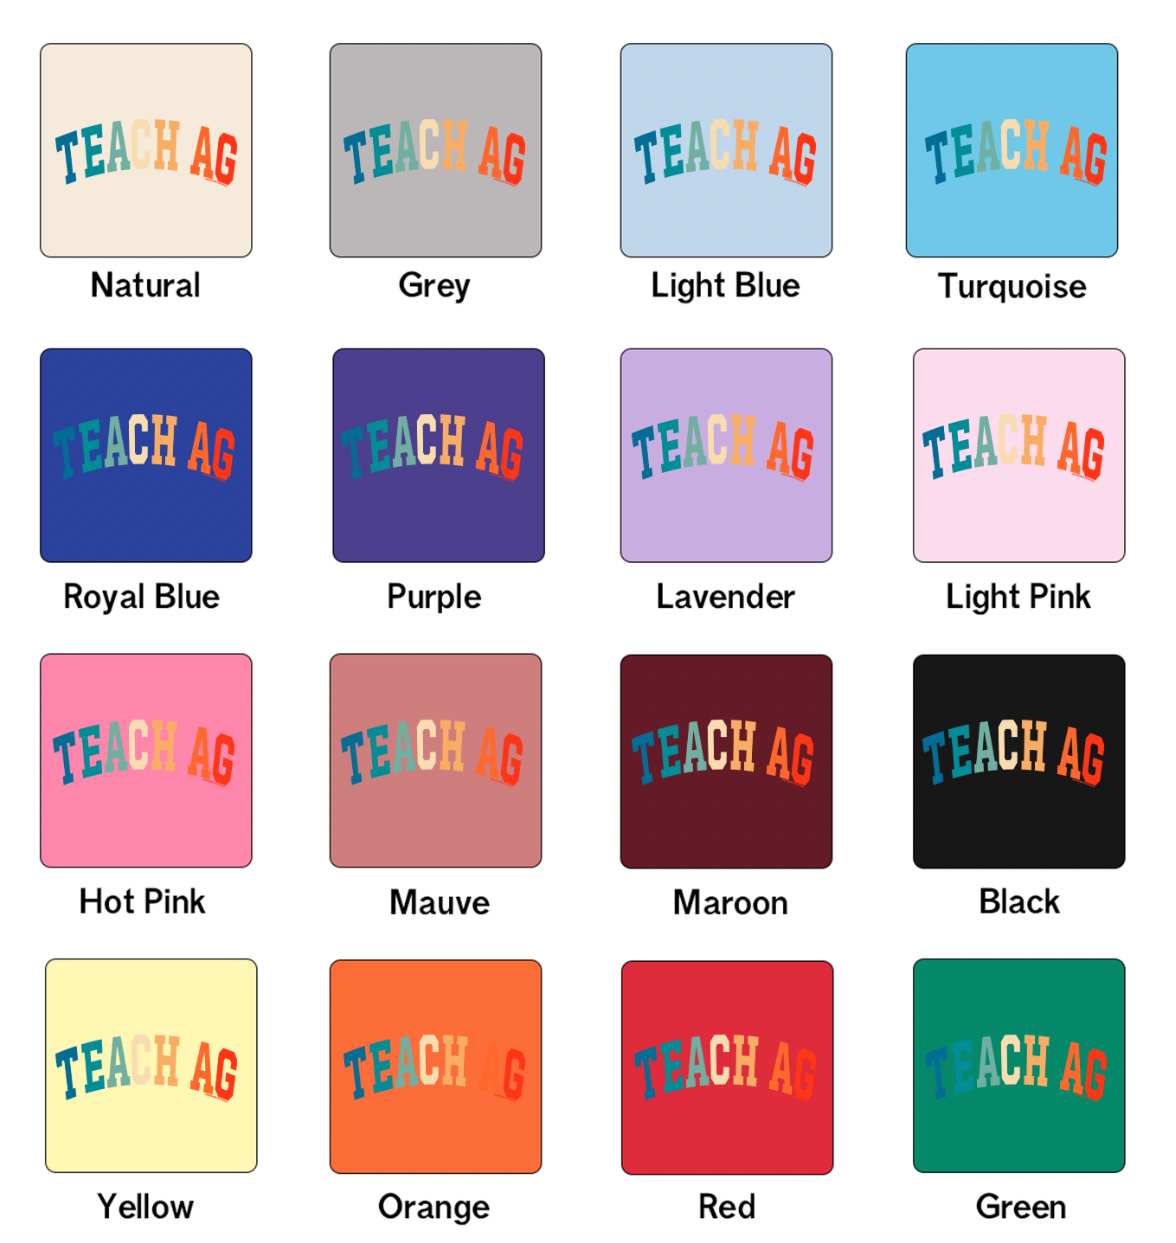 Varsity Teach Ag Color One Piece/T-Shirt (Newborn - Youth XL) - Multiple Colors!